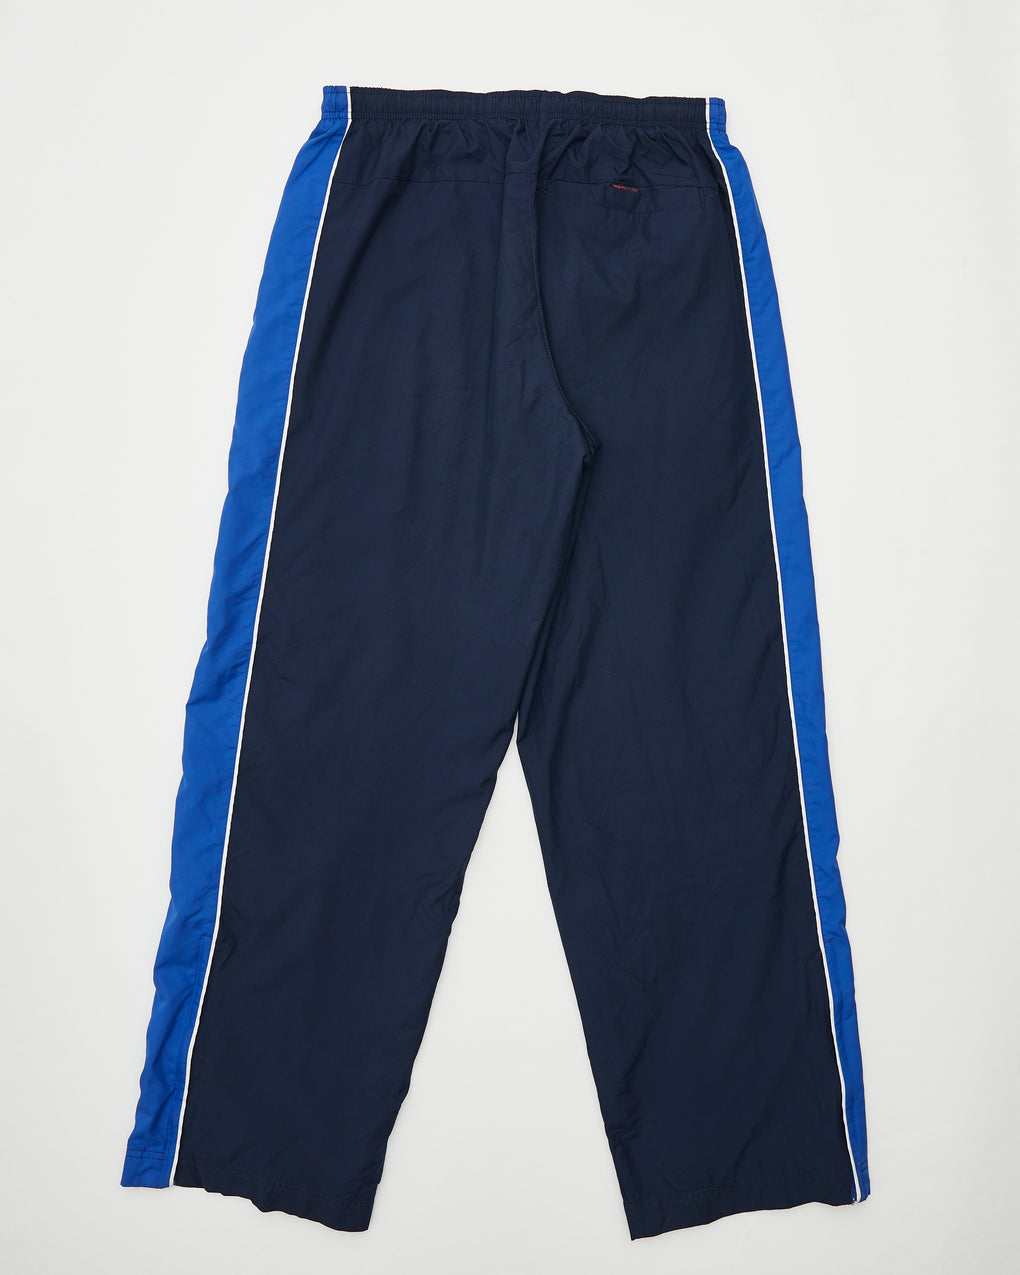 Nike Blue Track Pants (M)